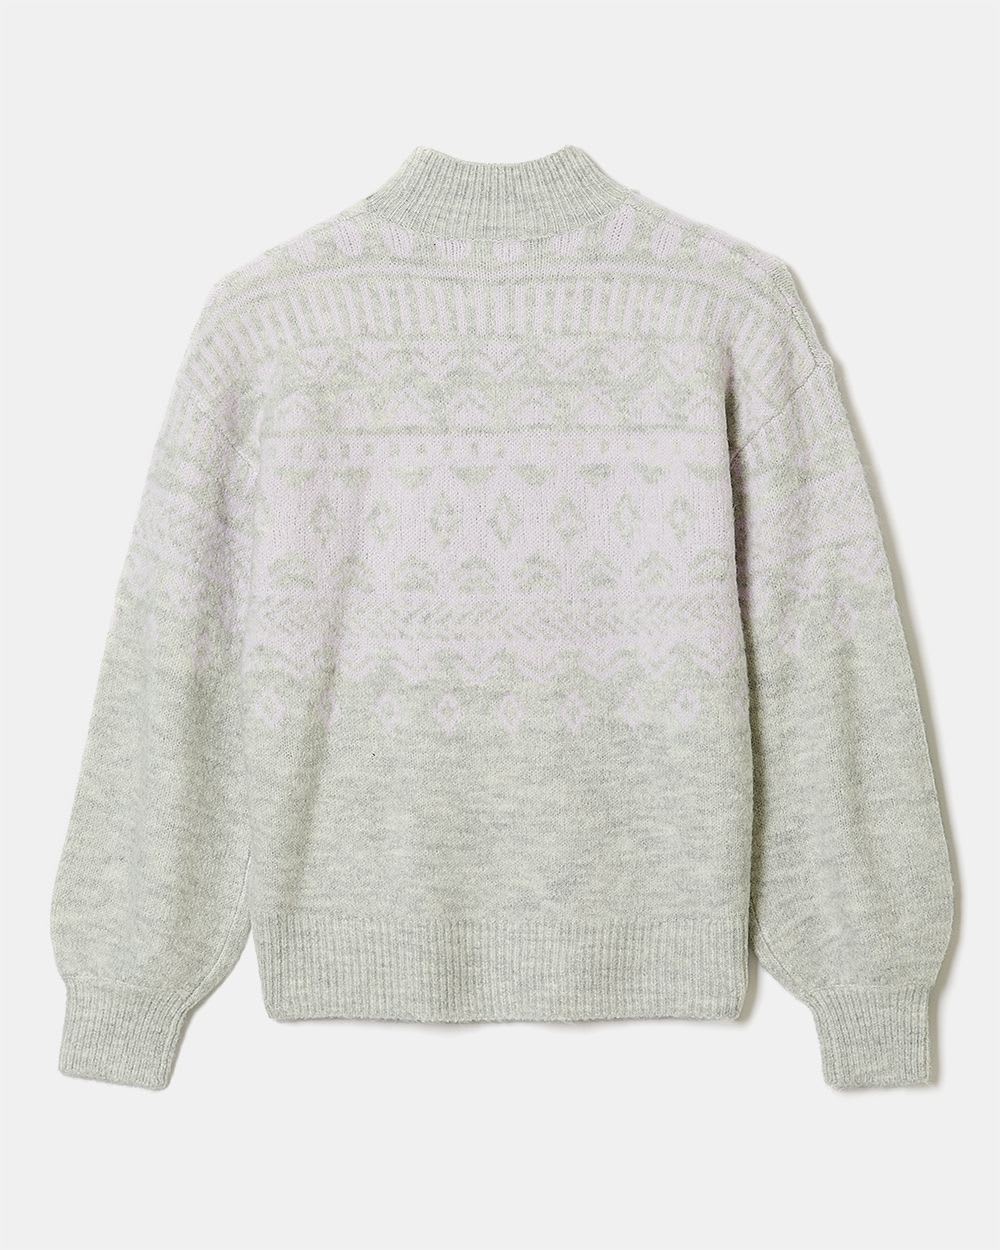 Spongy Fairisle Pattern Mock-Neck Pullover Sweater | RW&CO.